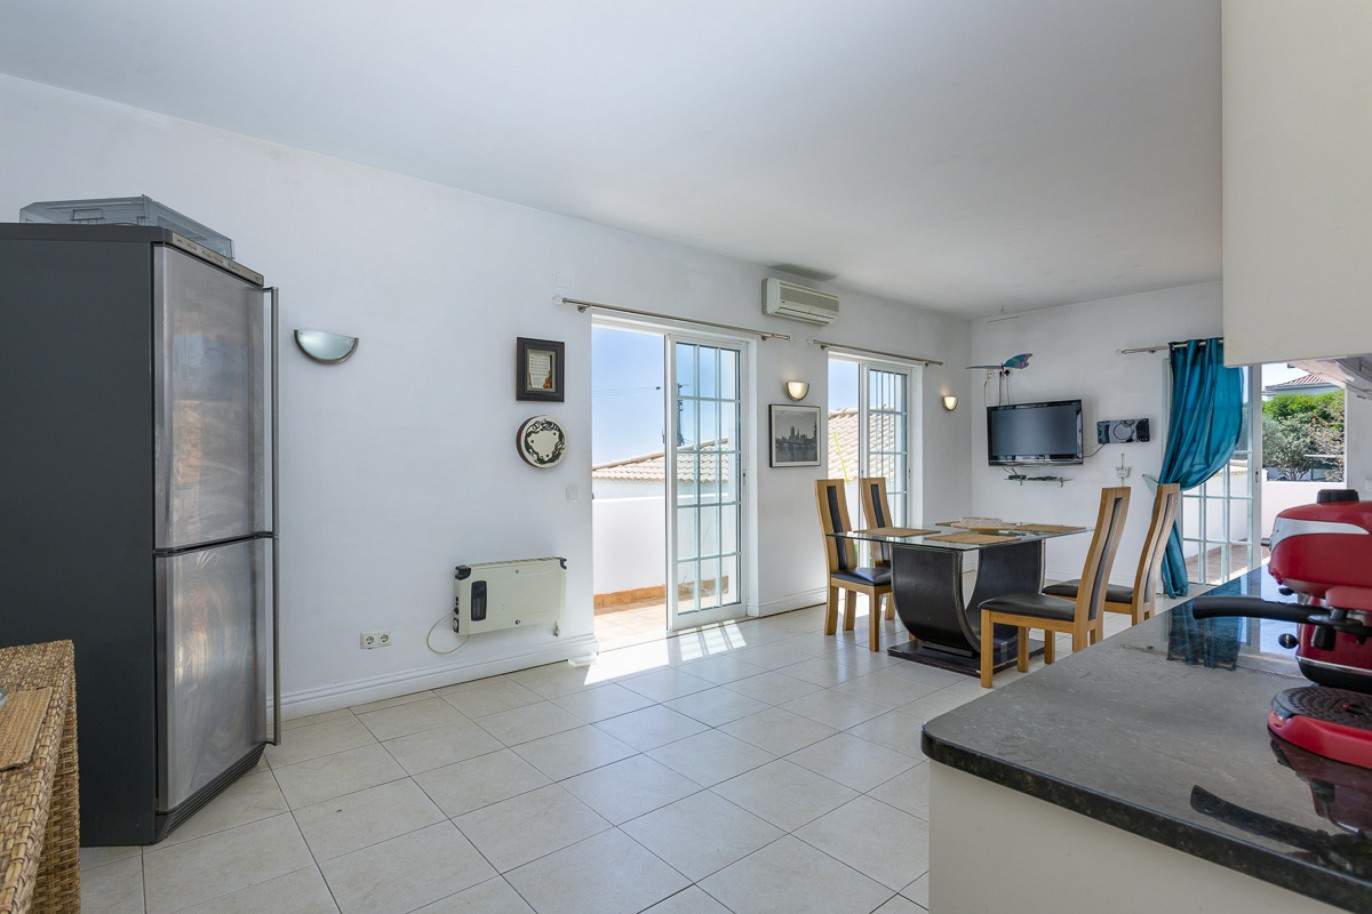 4 Bedroom Villa with sea view, for sale in Boliqueime, Algarve_209950